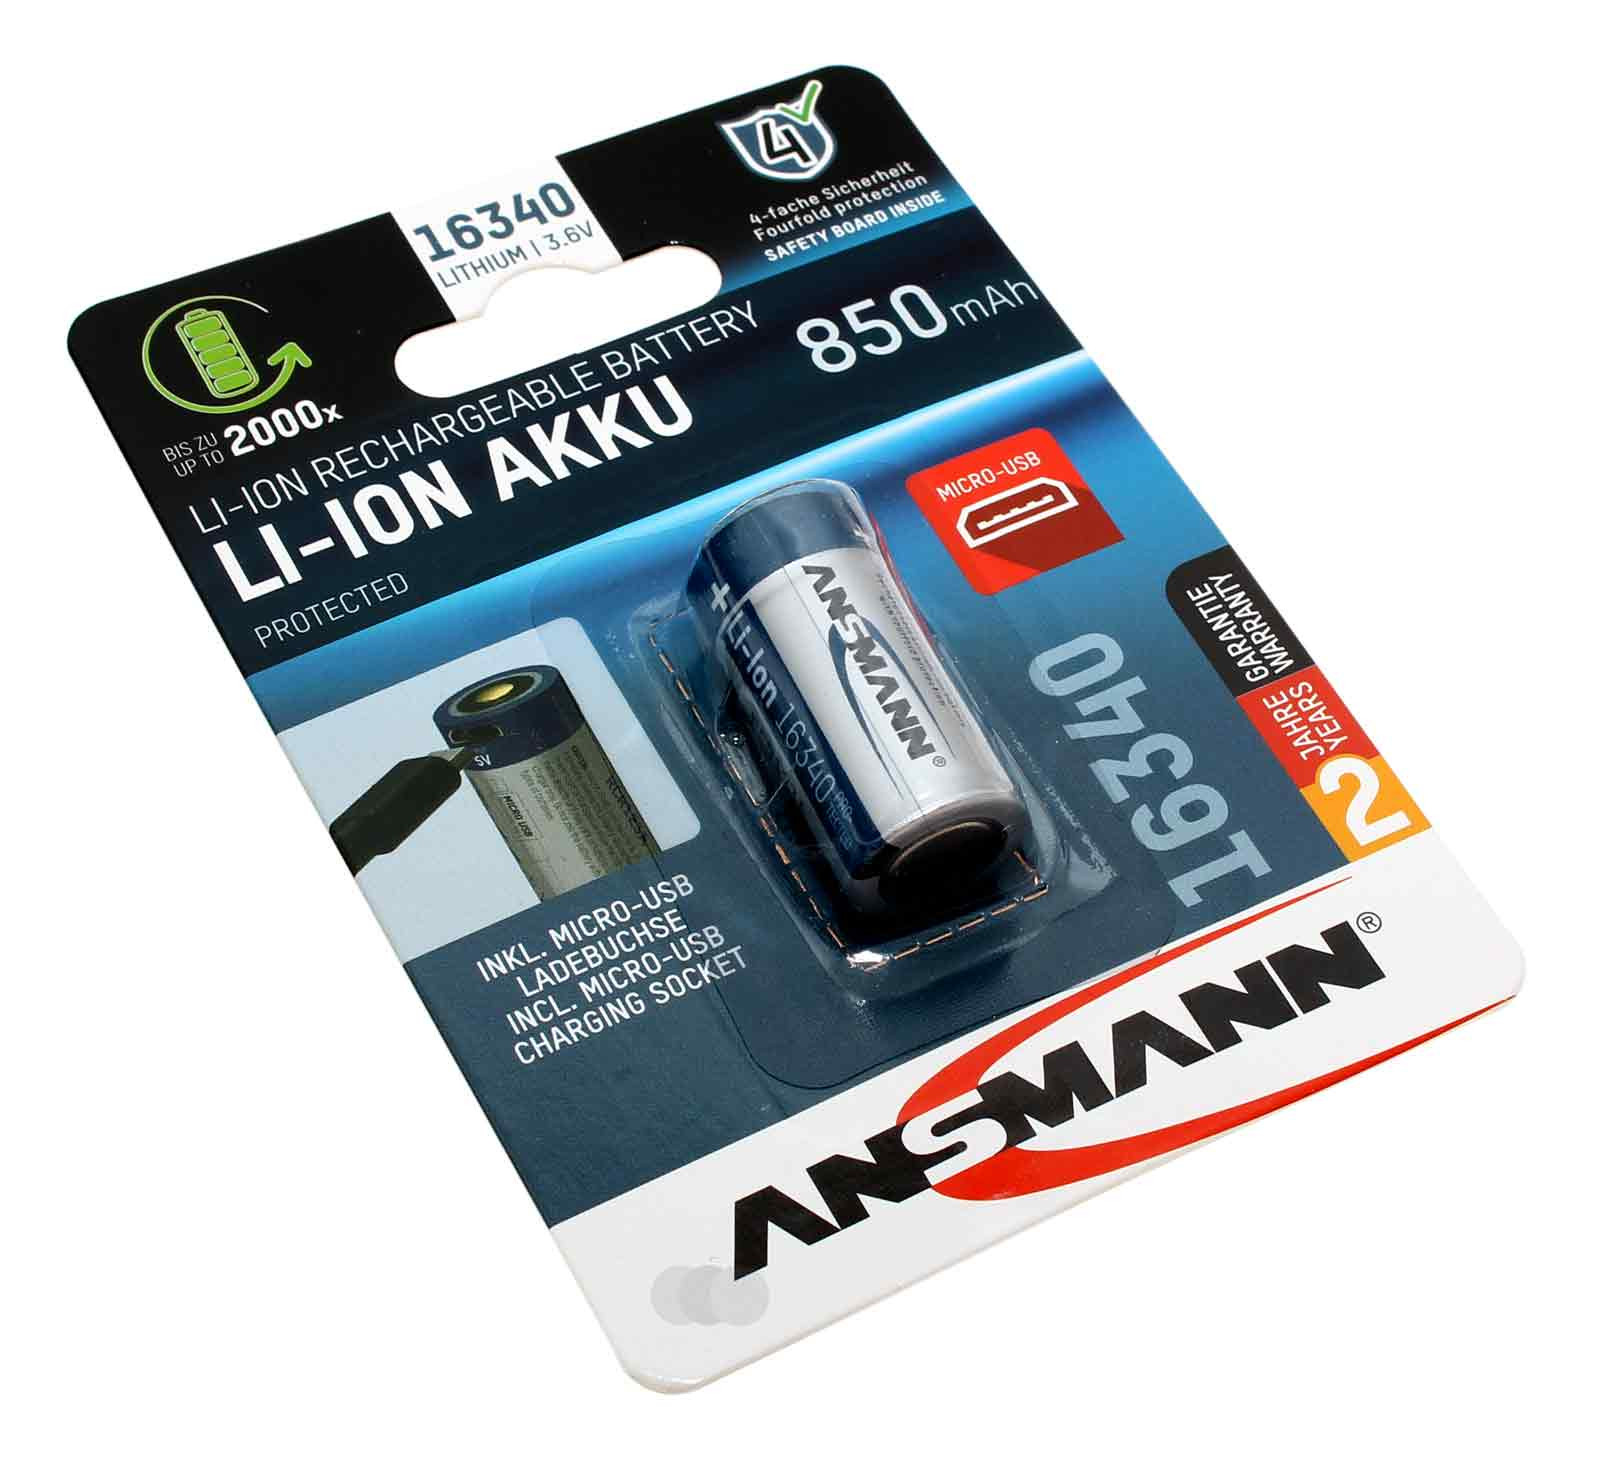 Ansmann 16340 Li-Ion Akku, micro-USB Ladebuchse, Schutzschaltung, 3,6V, 850mAh, 1300-0015